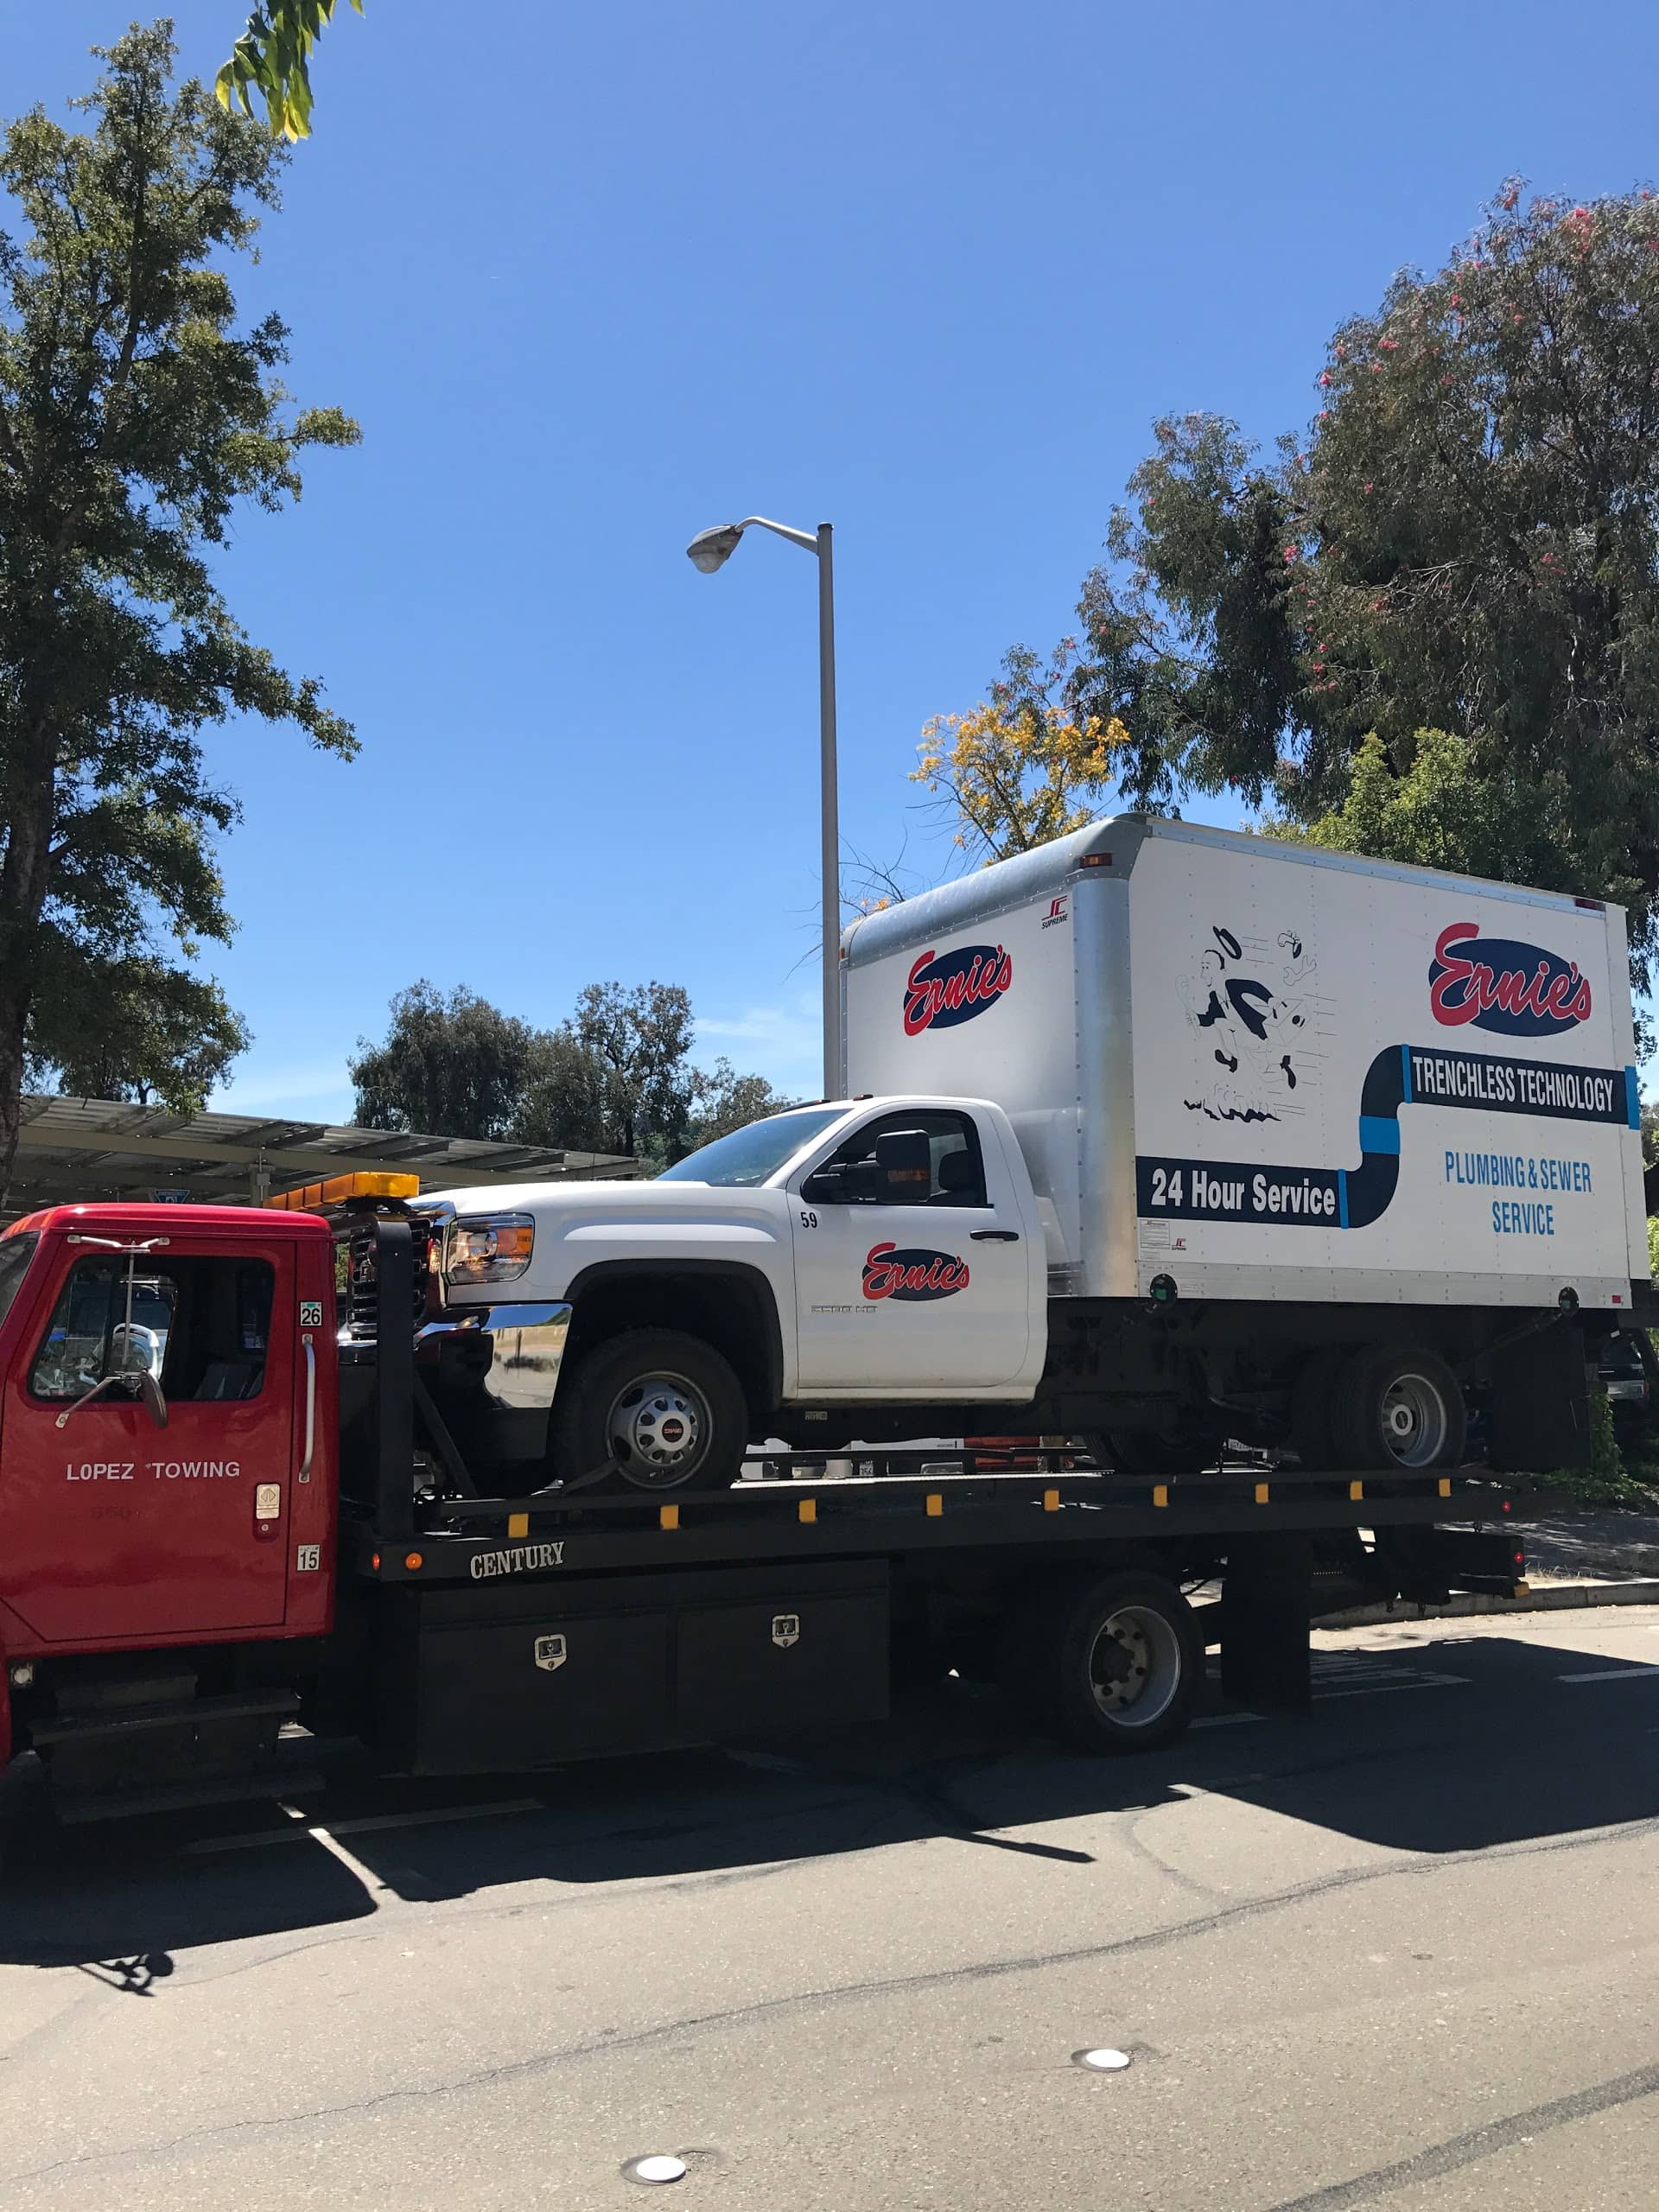 lopez towing service - San Bruno, CA, US, 24 hour roadside assistance near me